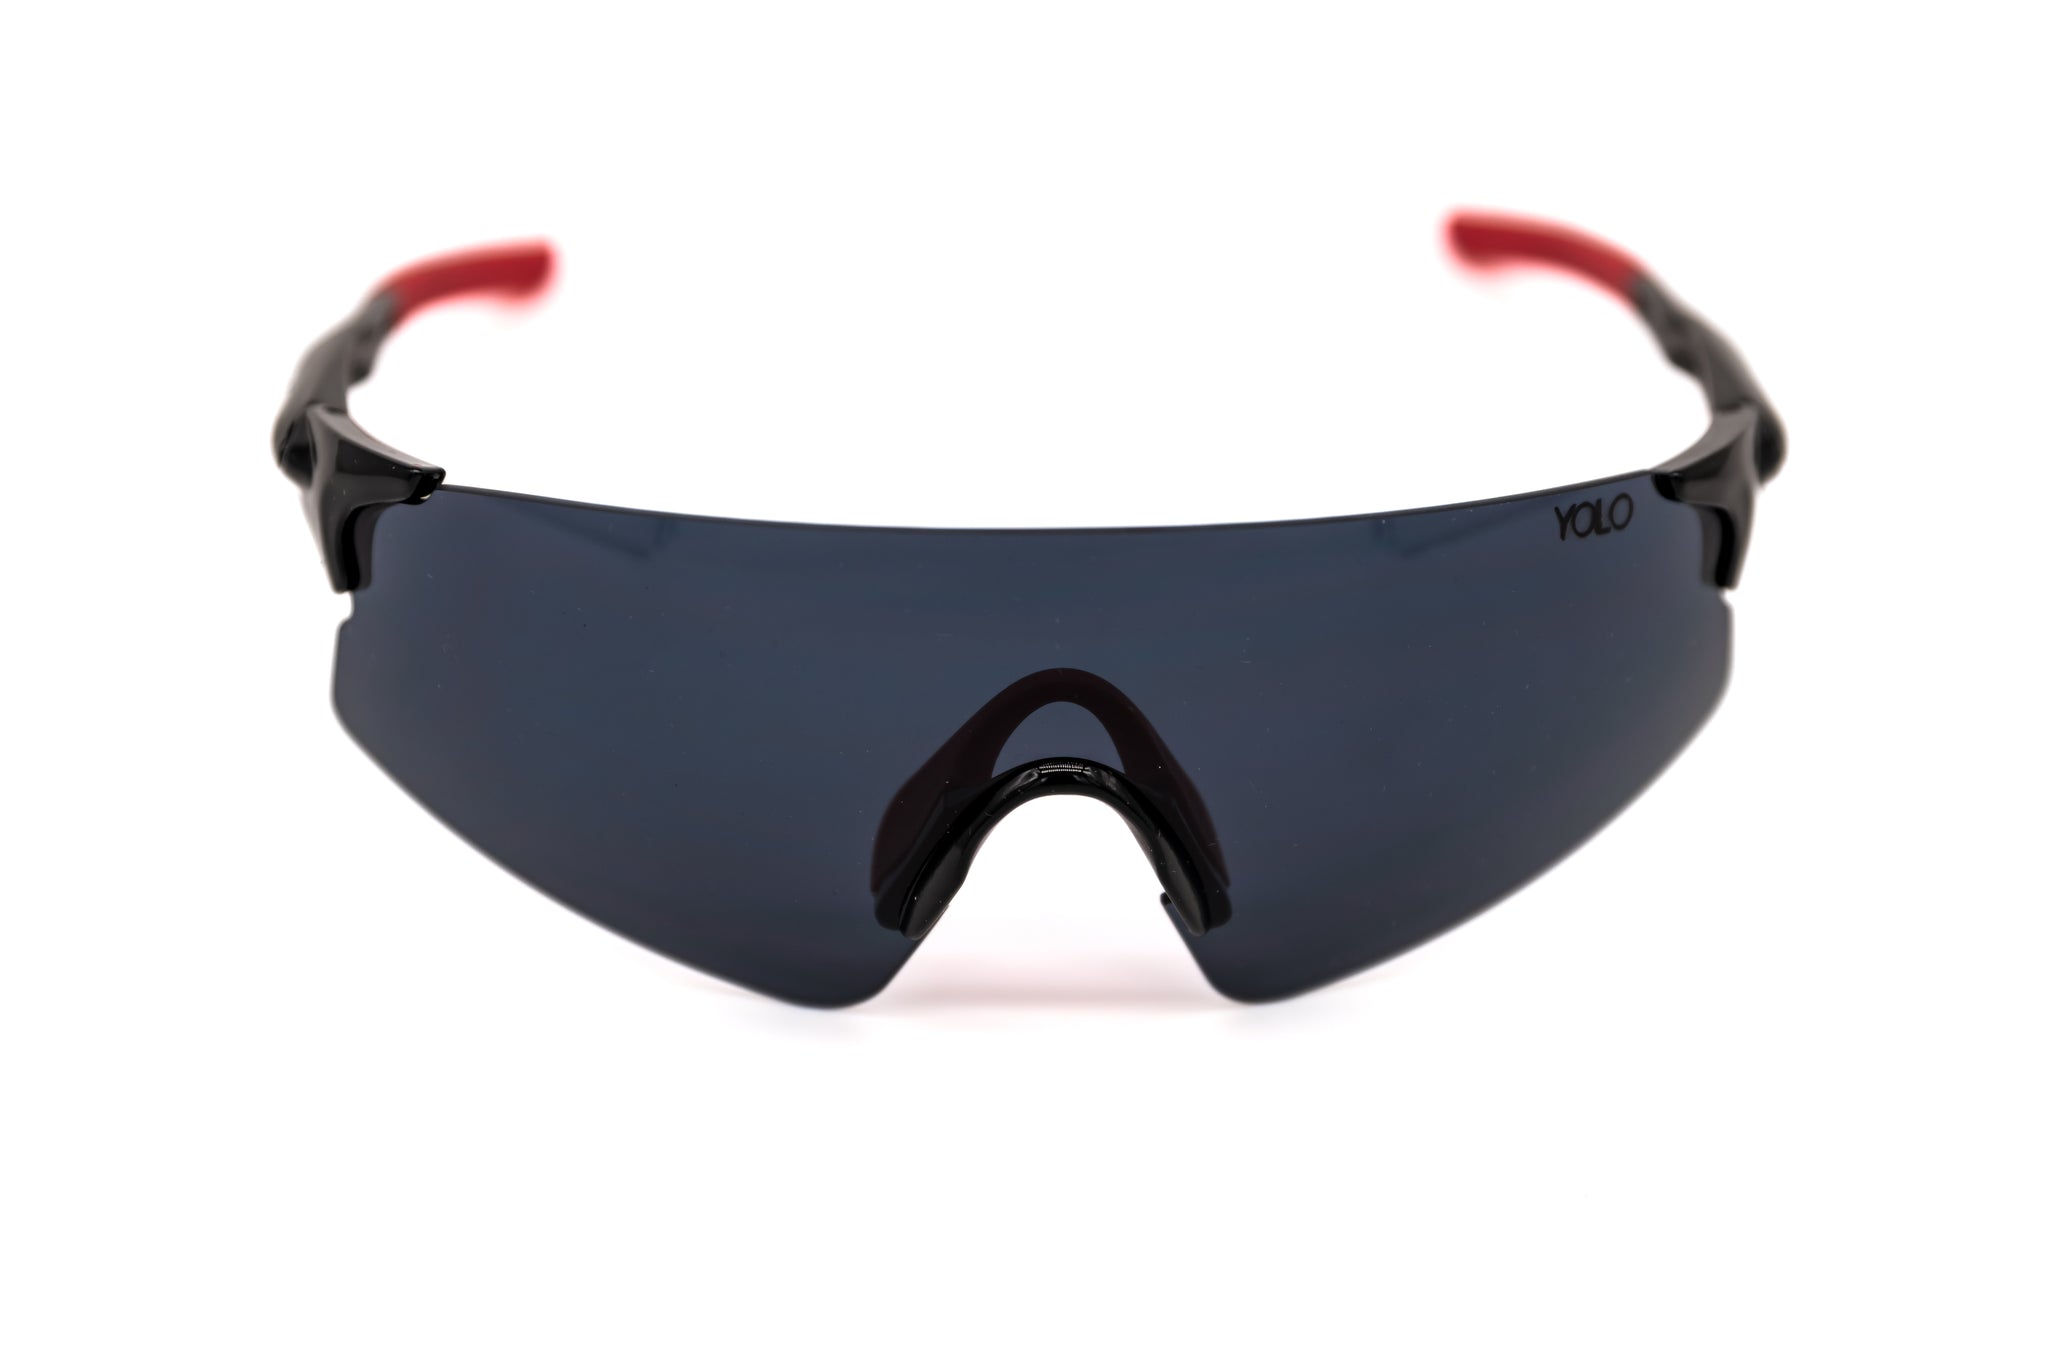 Graffiti Shield Sports Sunglasses with Large Multicolor Mirror Lens